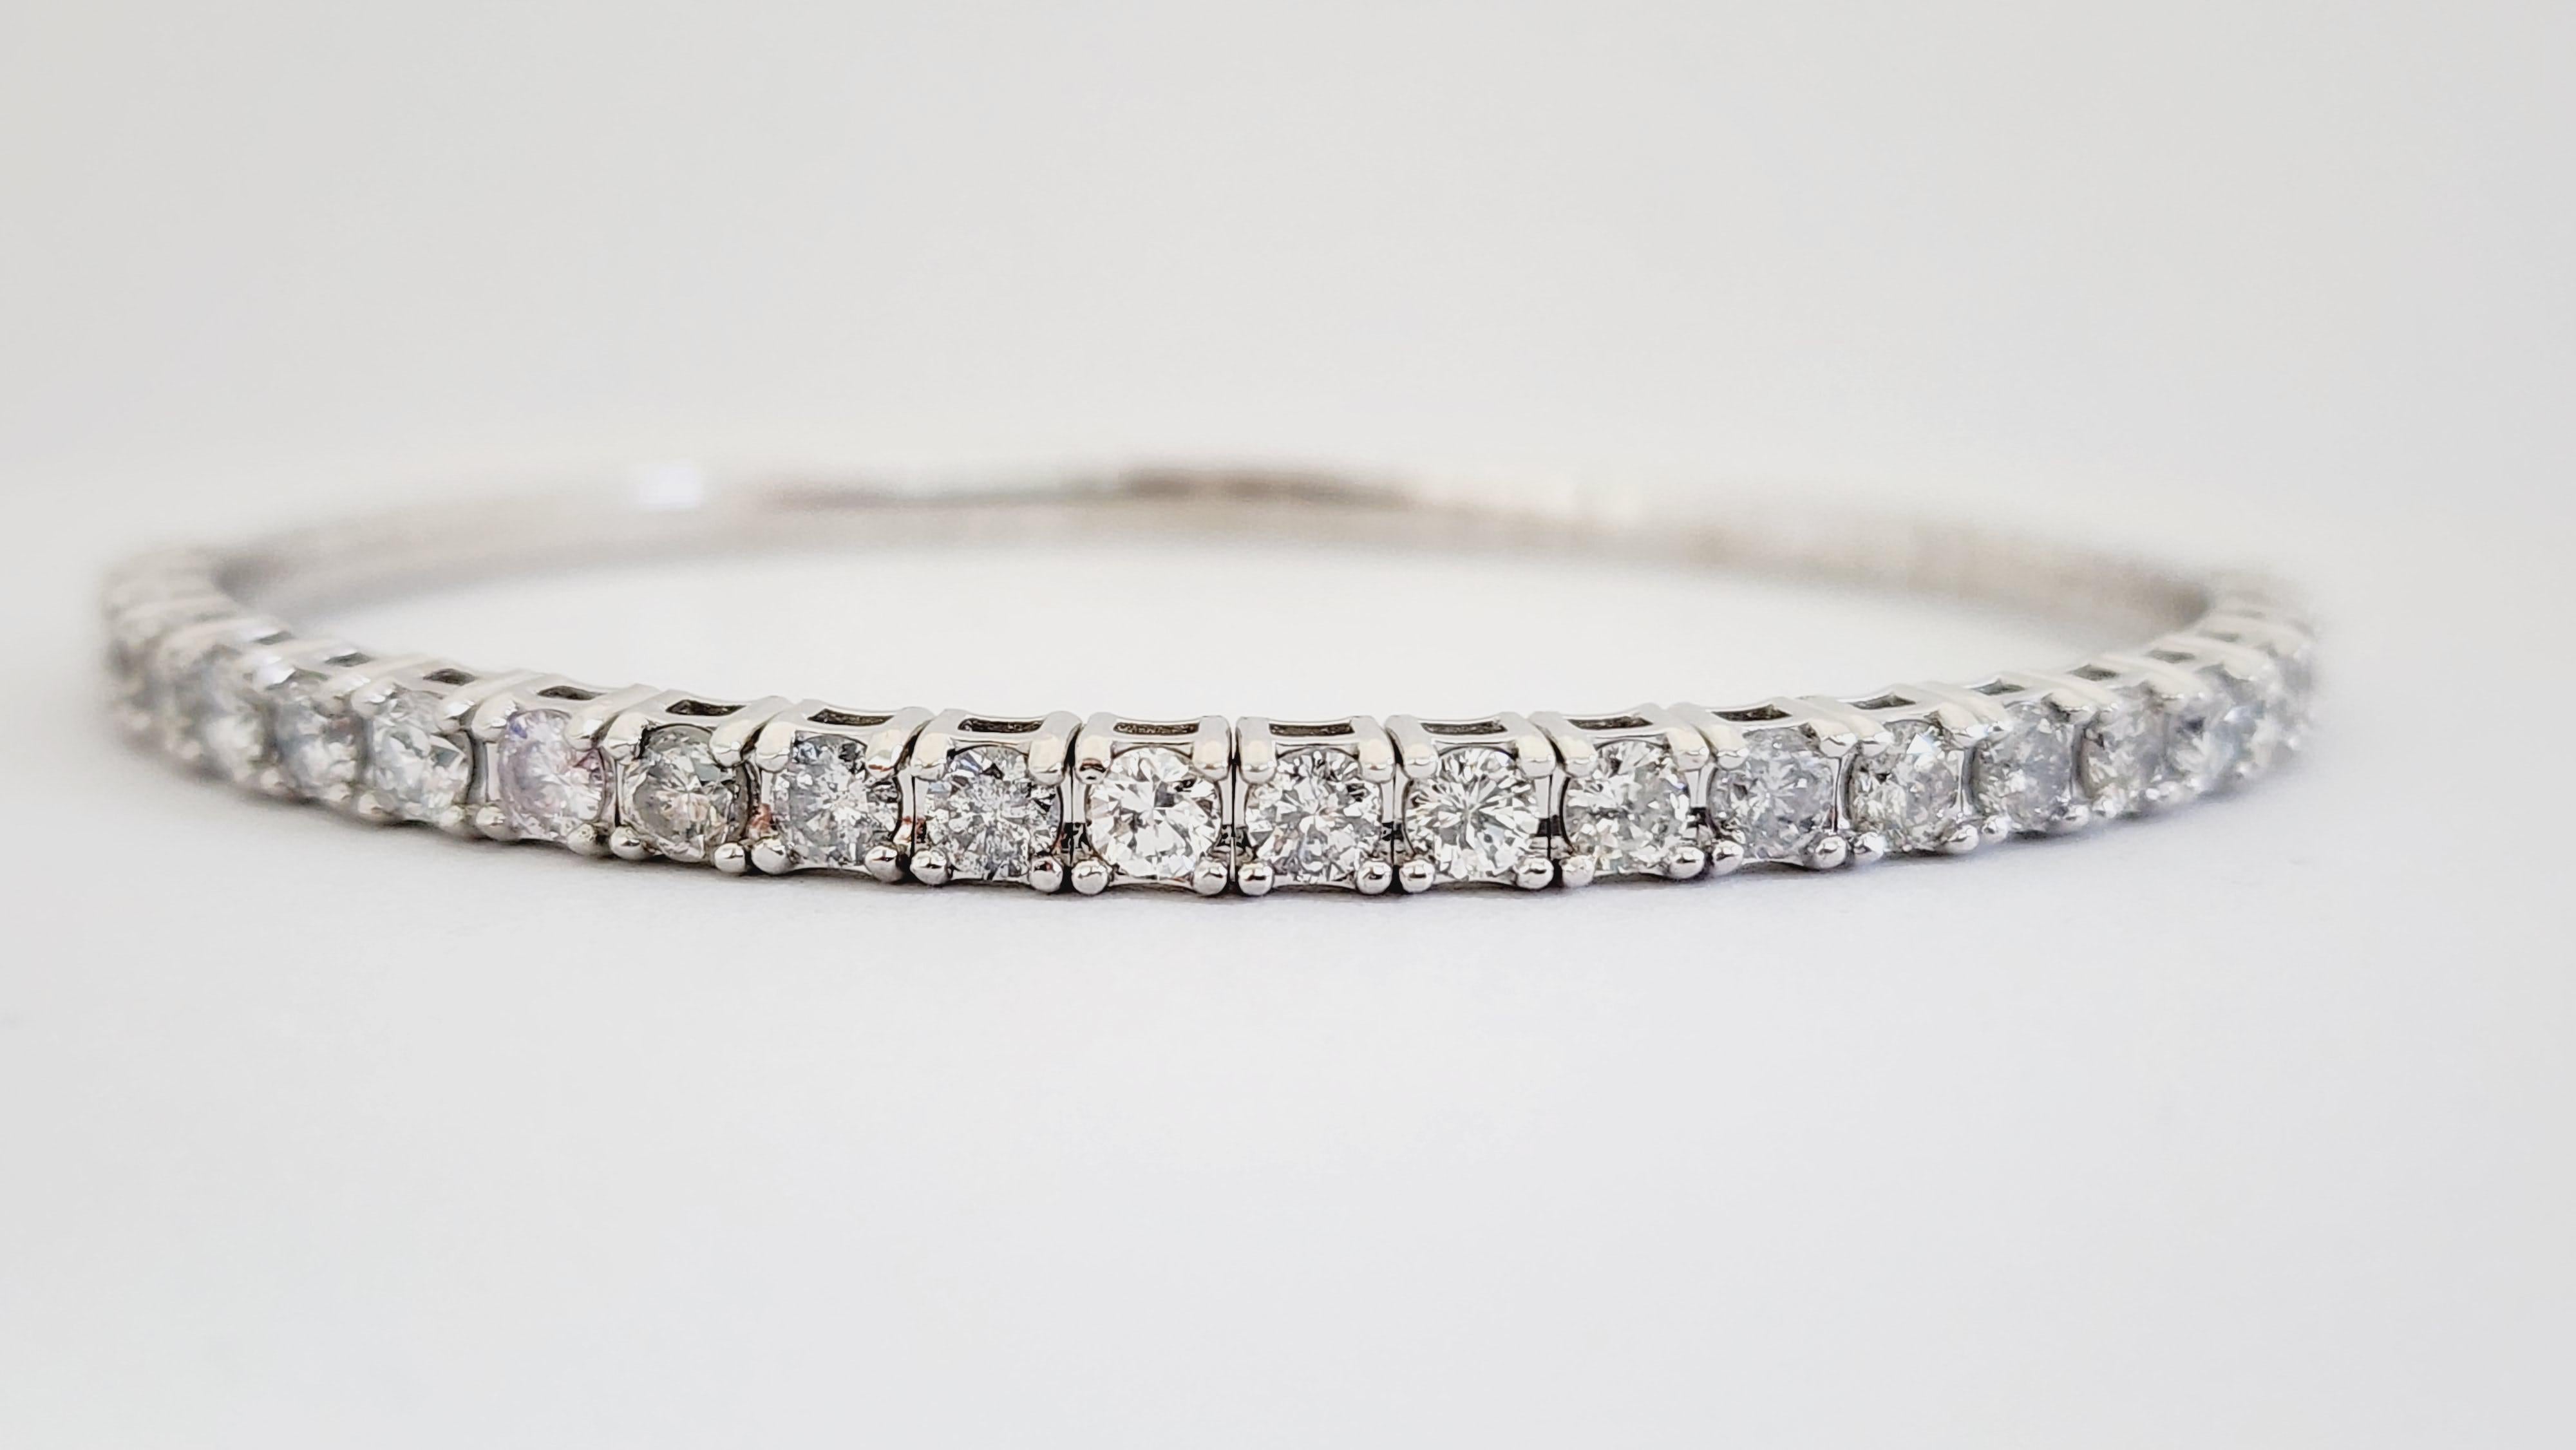 Natural Diamonds 3.40 ctw flexible half way around bangle white gold 14k 7 Inch. 
Average Color F Clarity I, 3.9 mm wide.